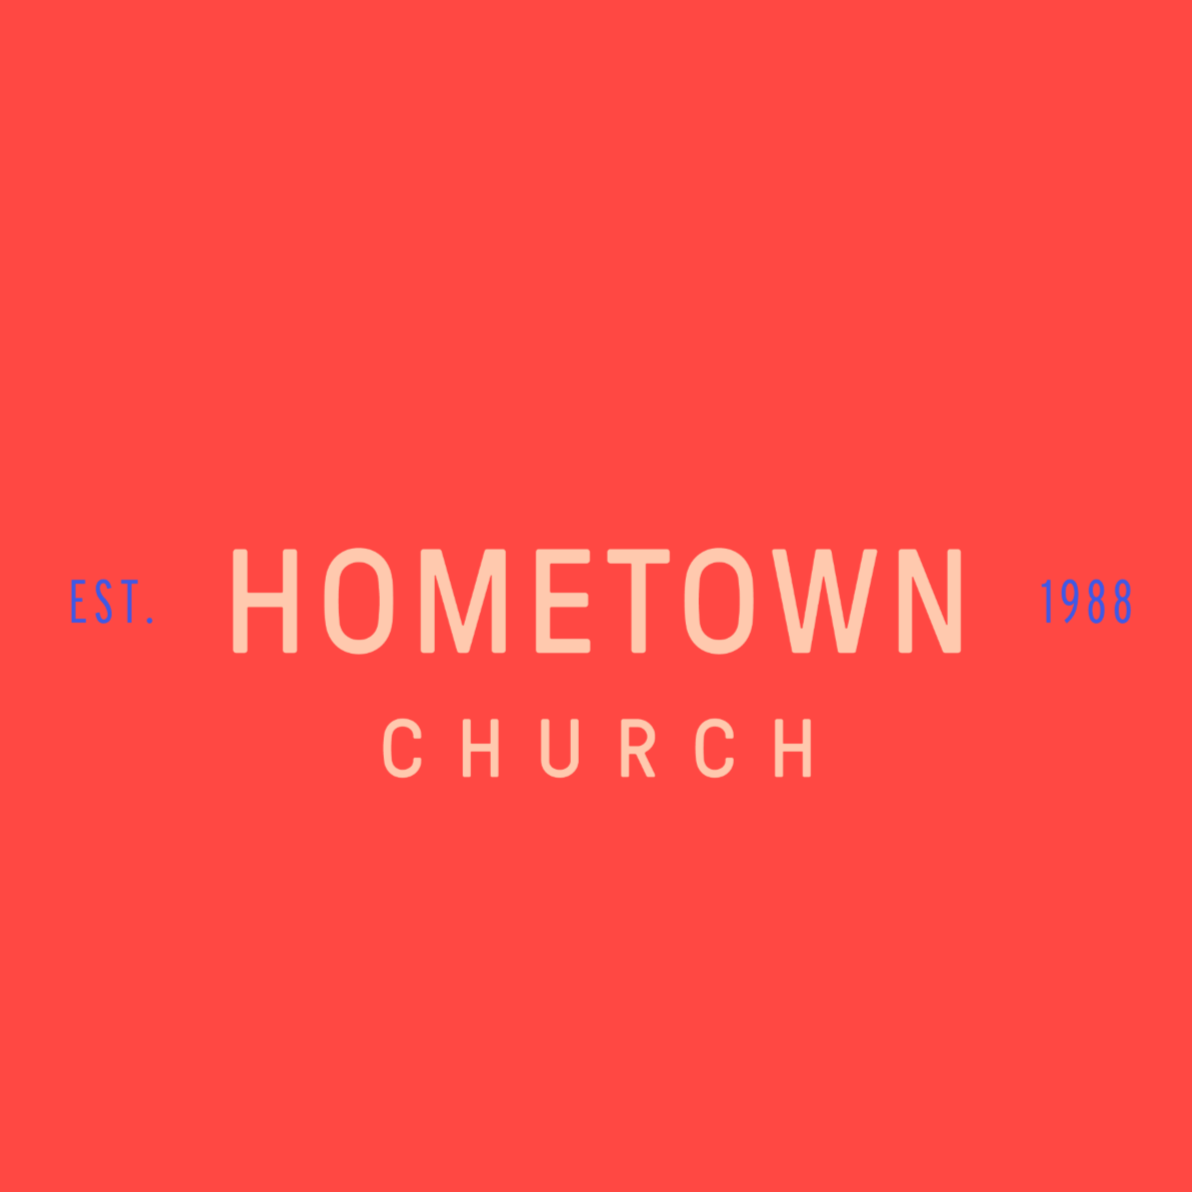 Hometown Church